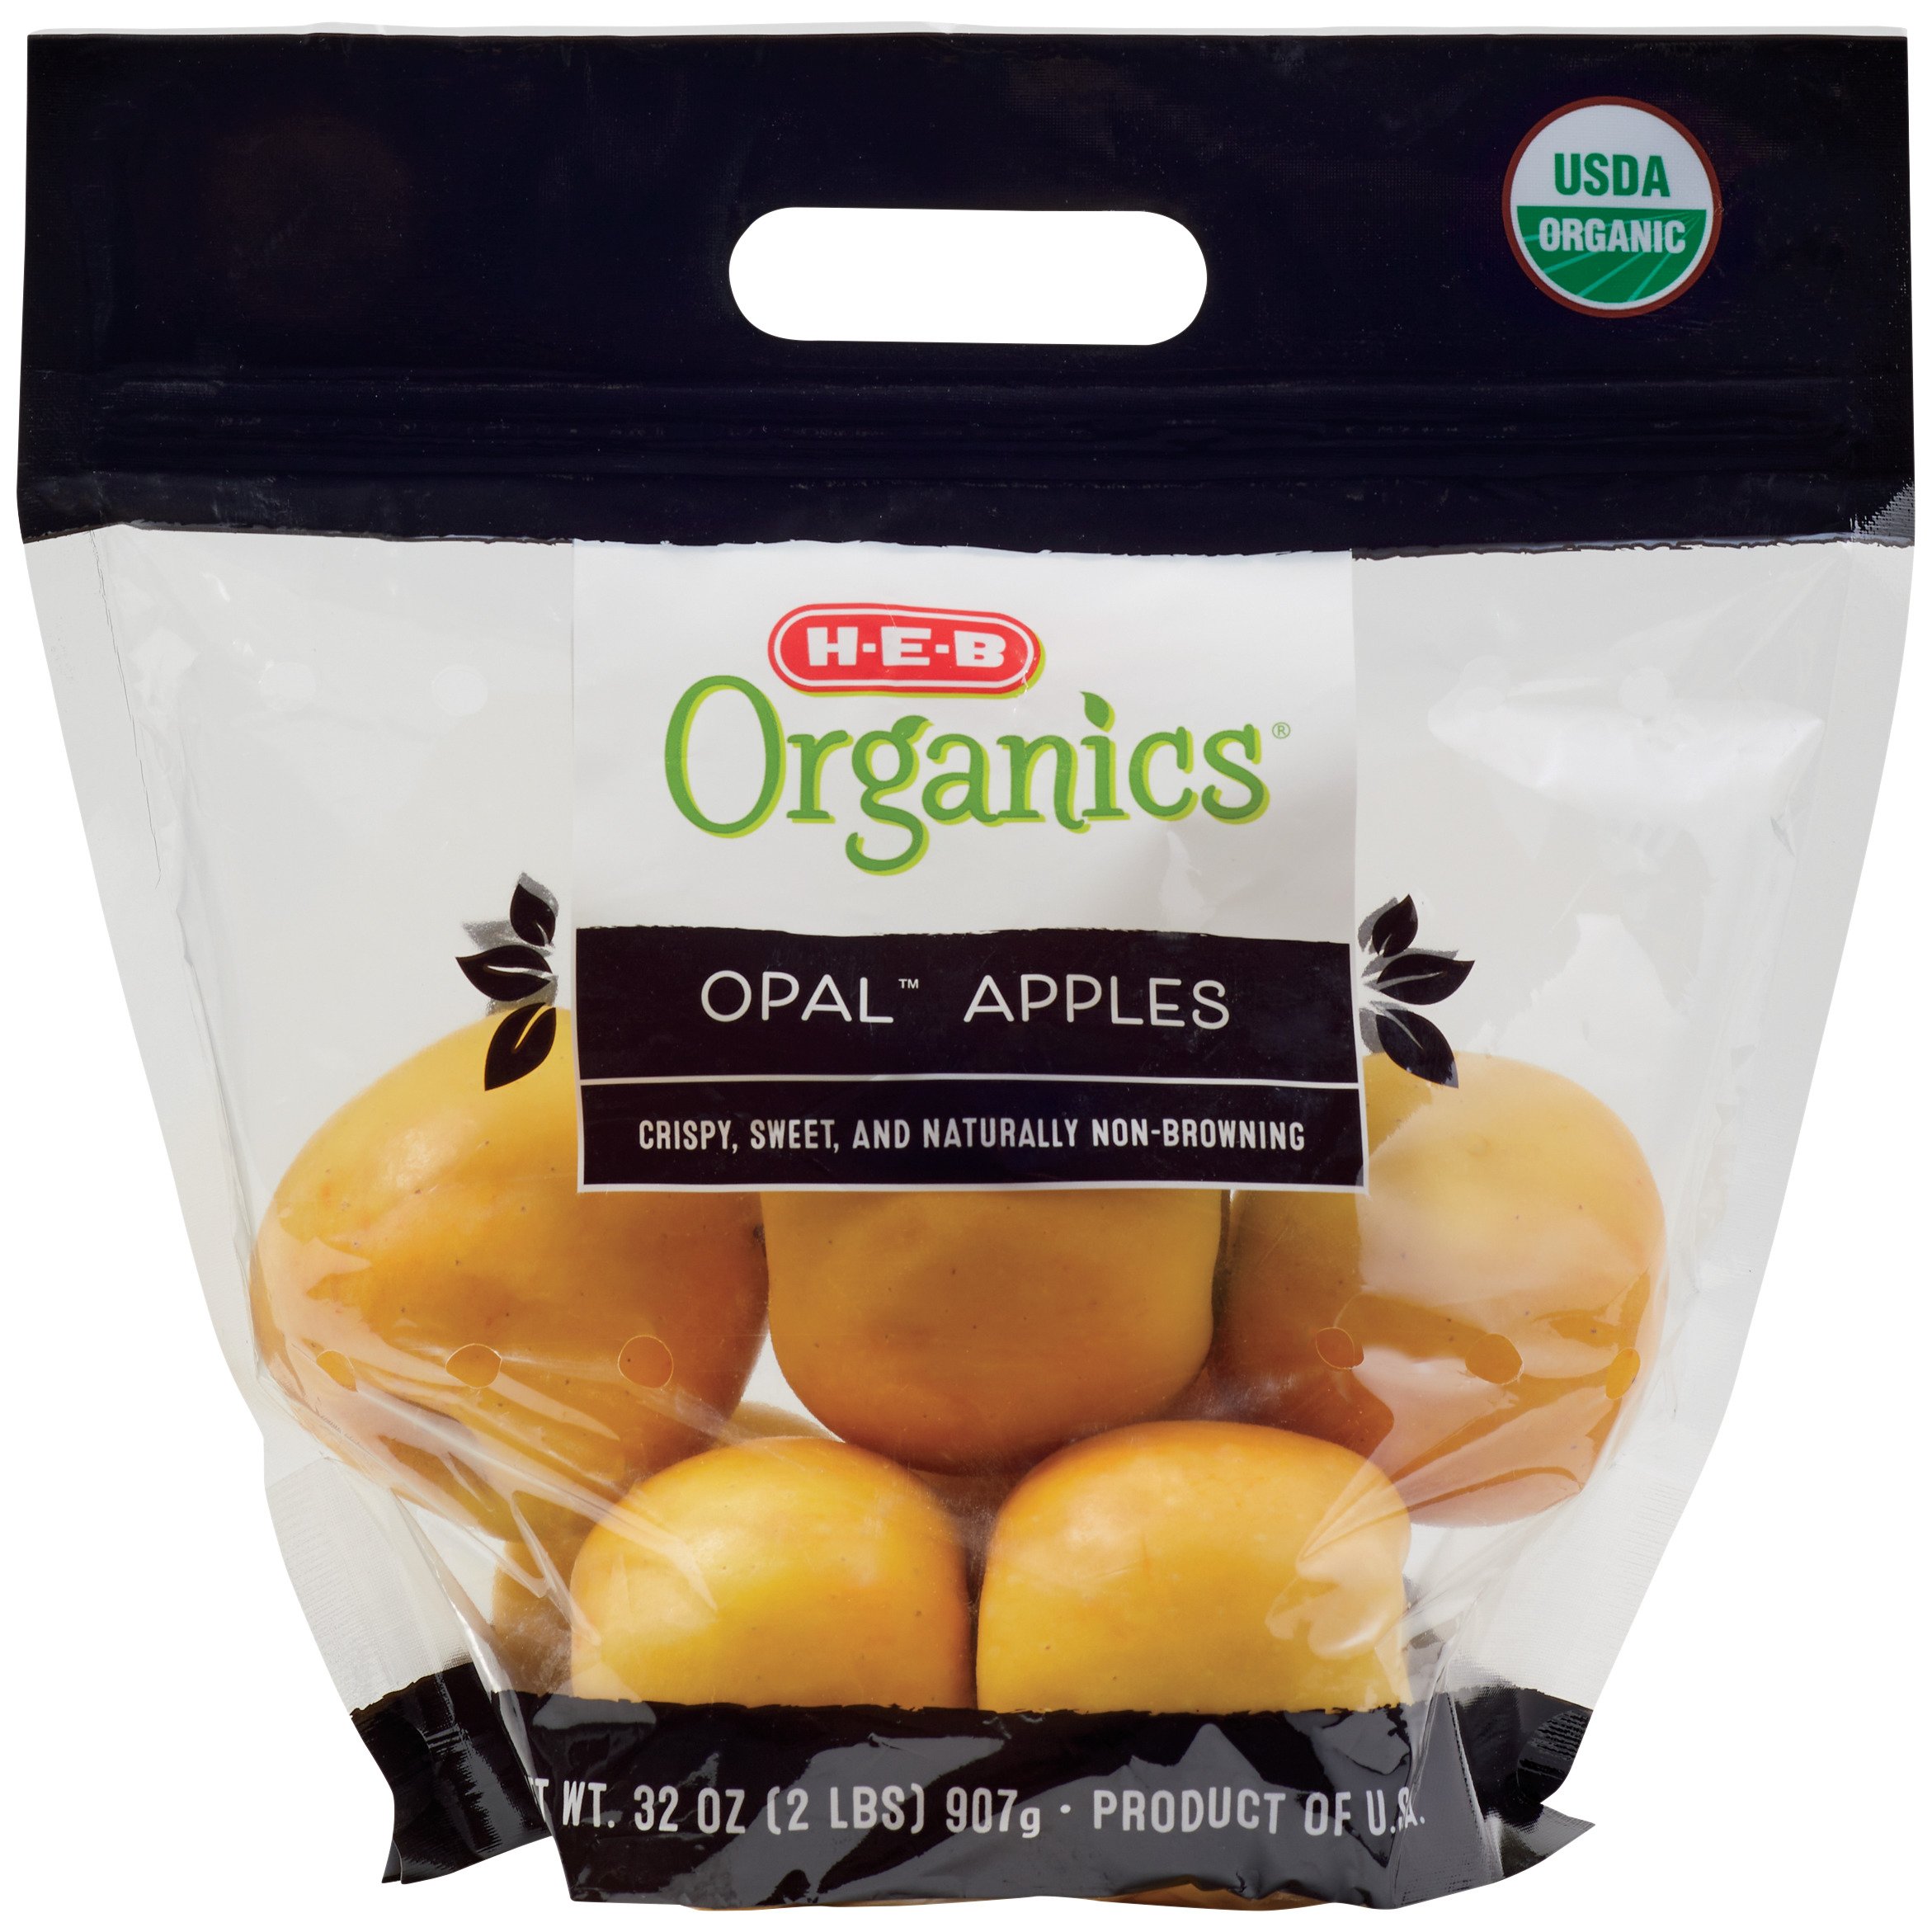 Large Organic Opal Apple, 1 lb - Harris Teeter